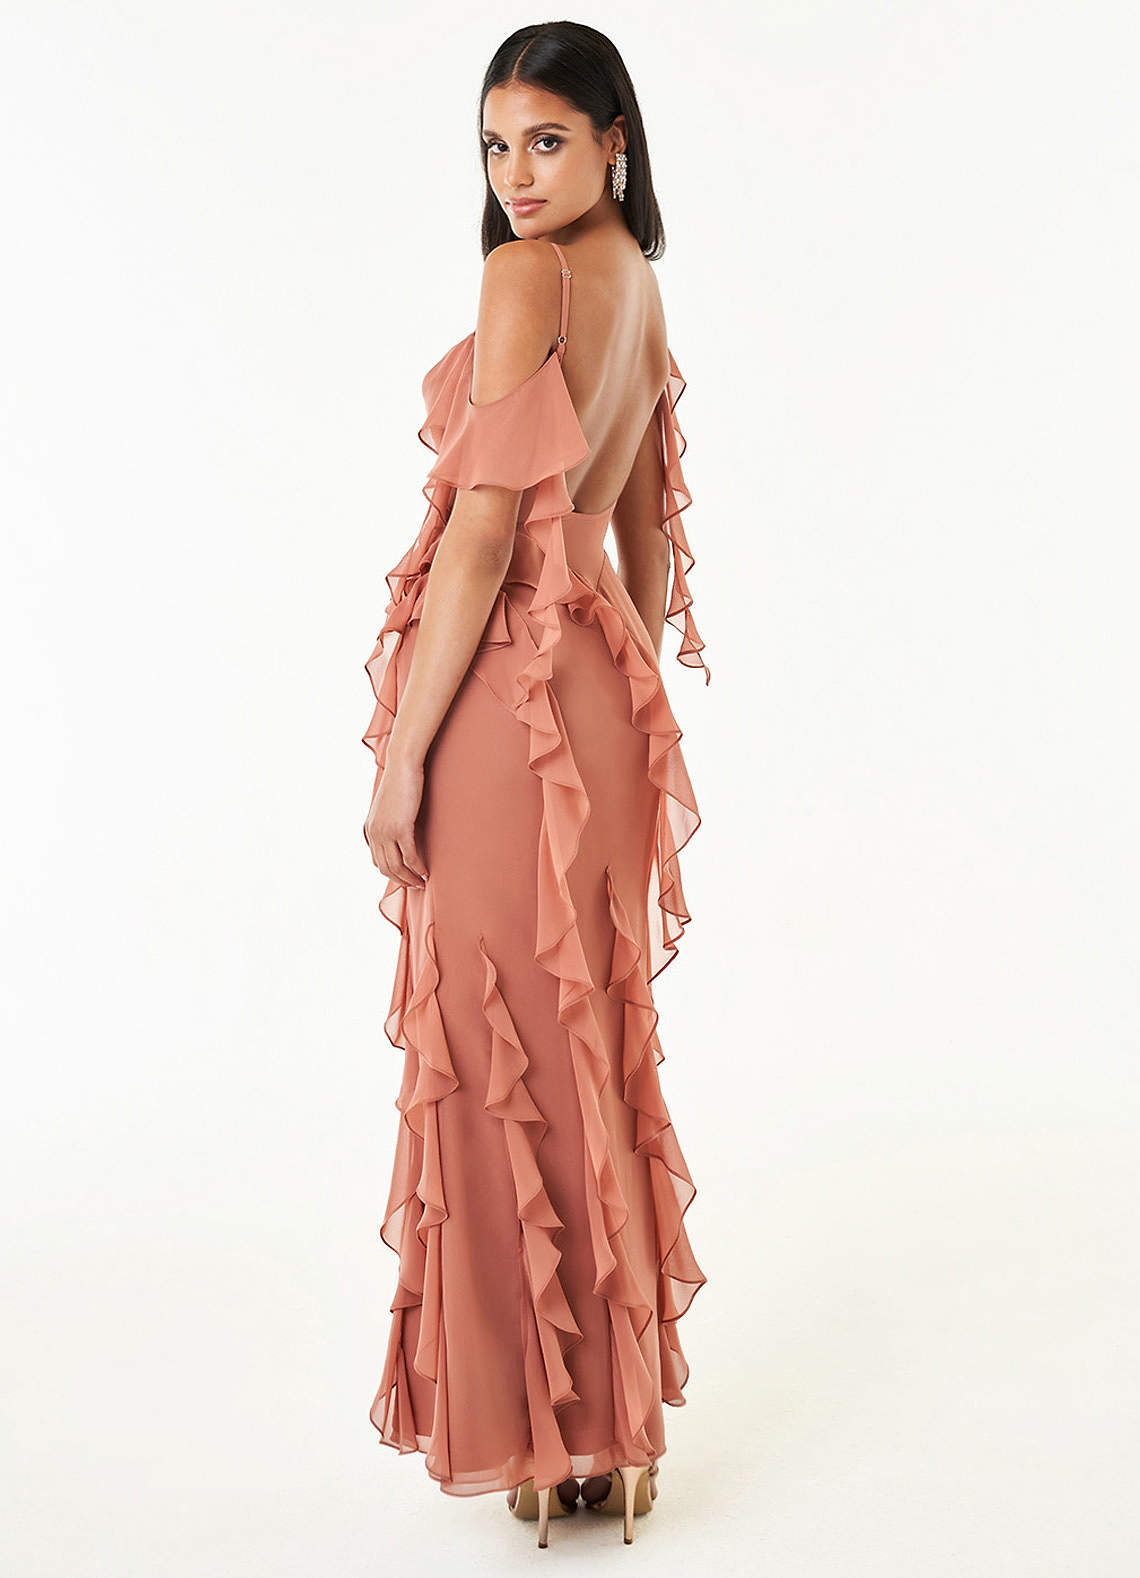 Francesca Copper Ruffle Gown image2